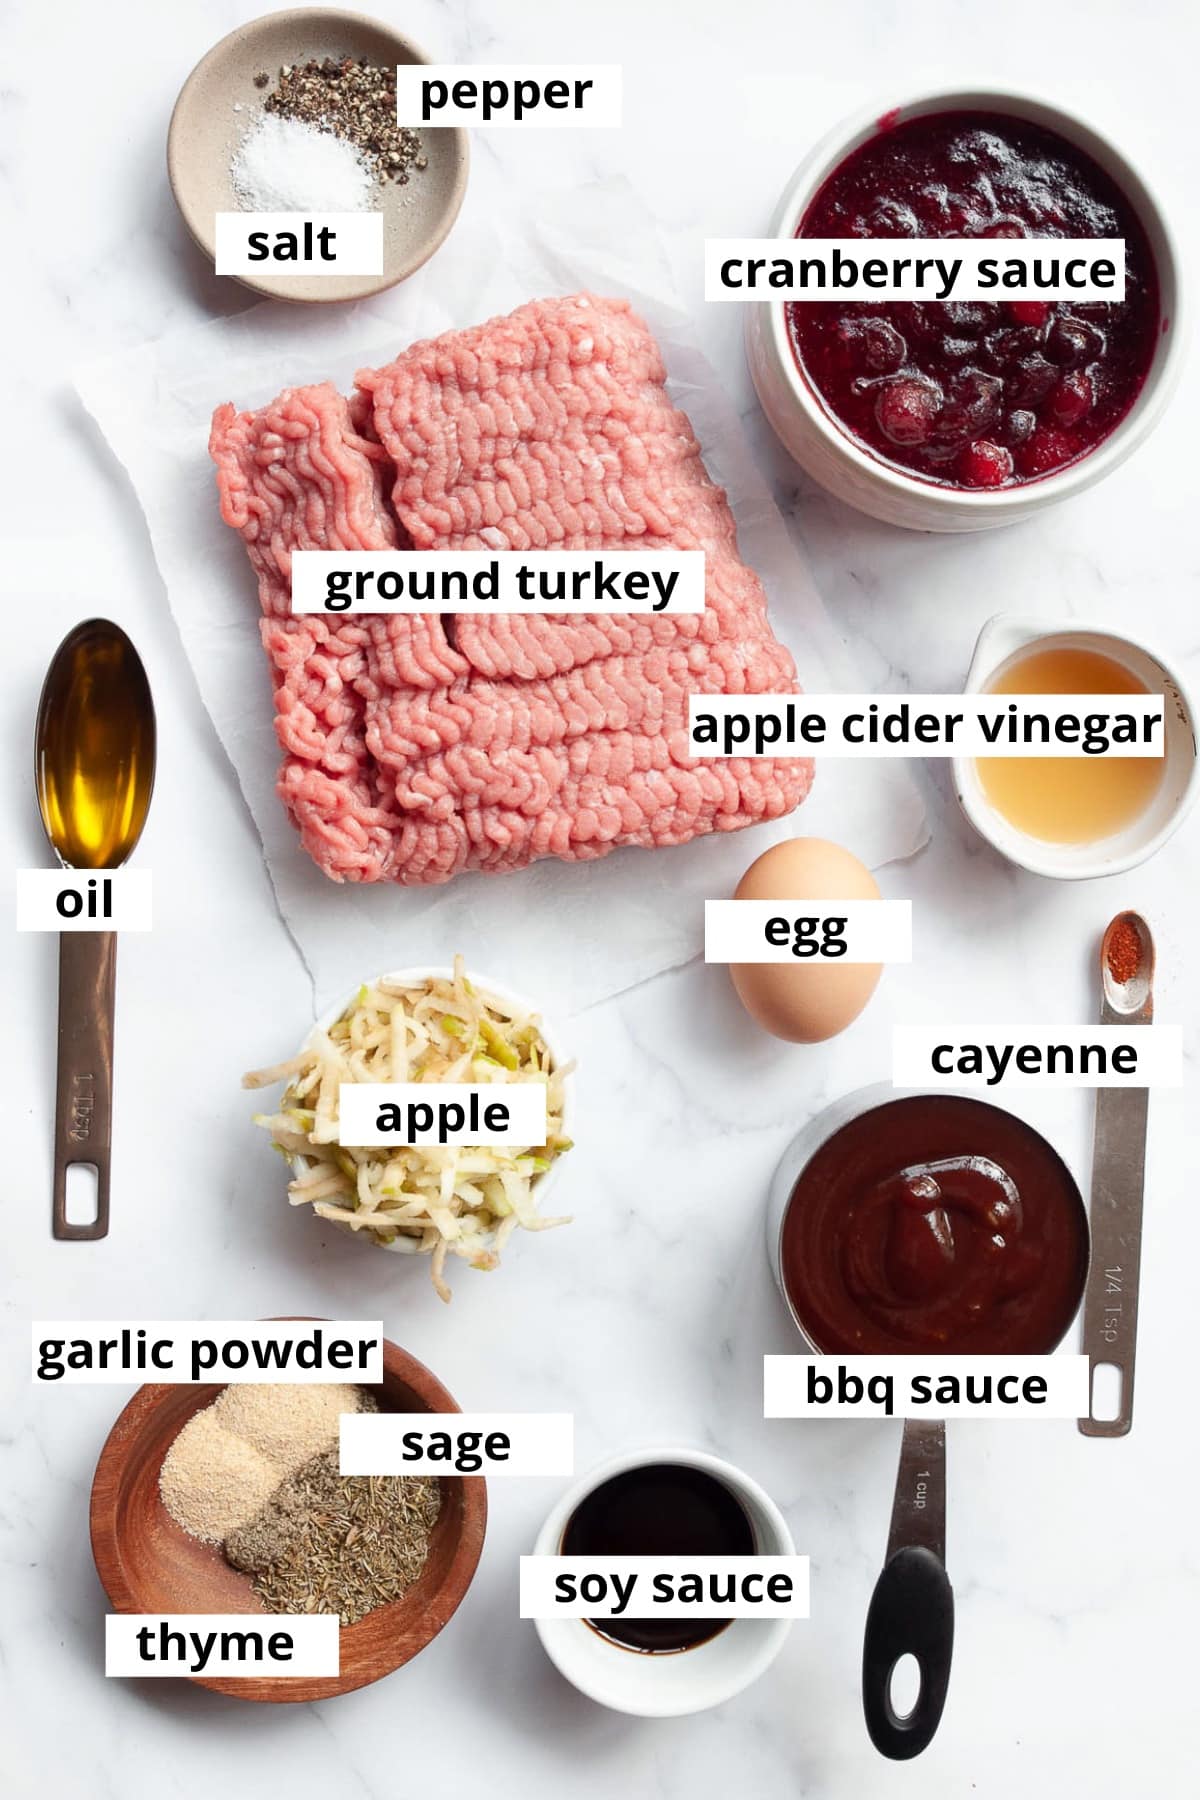 Ground turkey, cranberry sauce, BBQ sauce, apple cider vinegar, egg, apple, cayenne, oil, soy sauce, garlic powder, sage, thyme, salt and pepper.